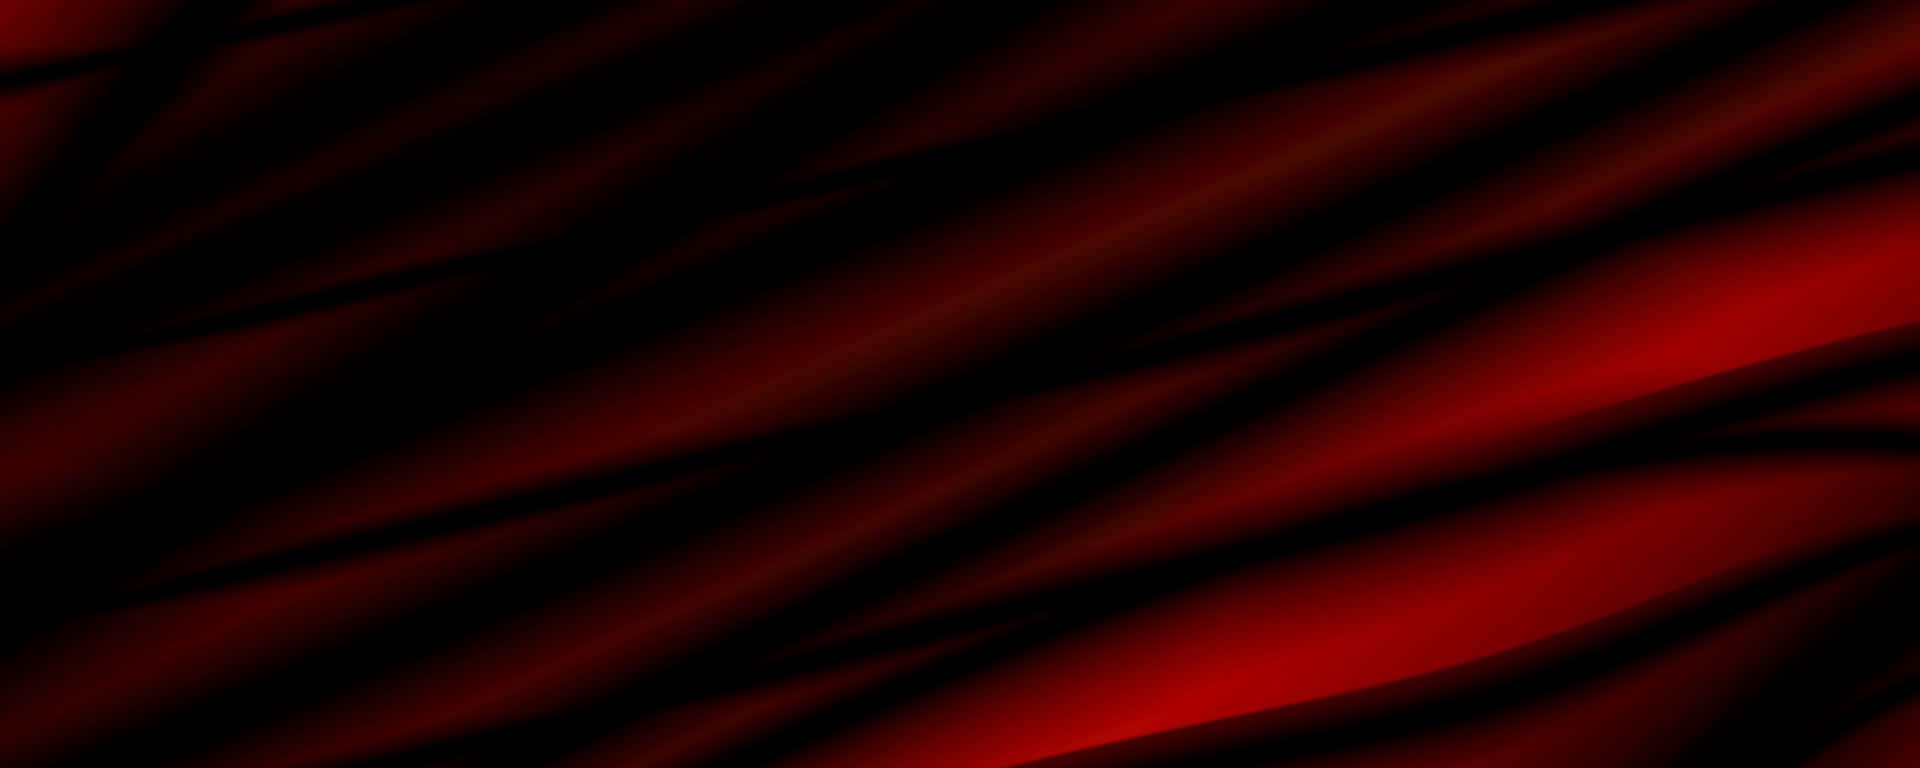 Fabric Red Ultra Wide HD Wallpaper